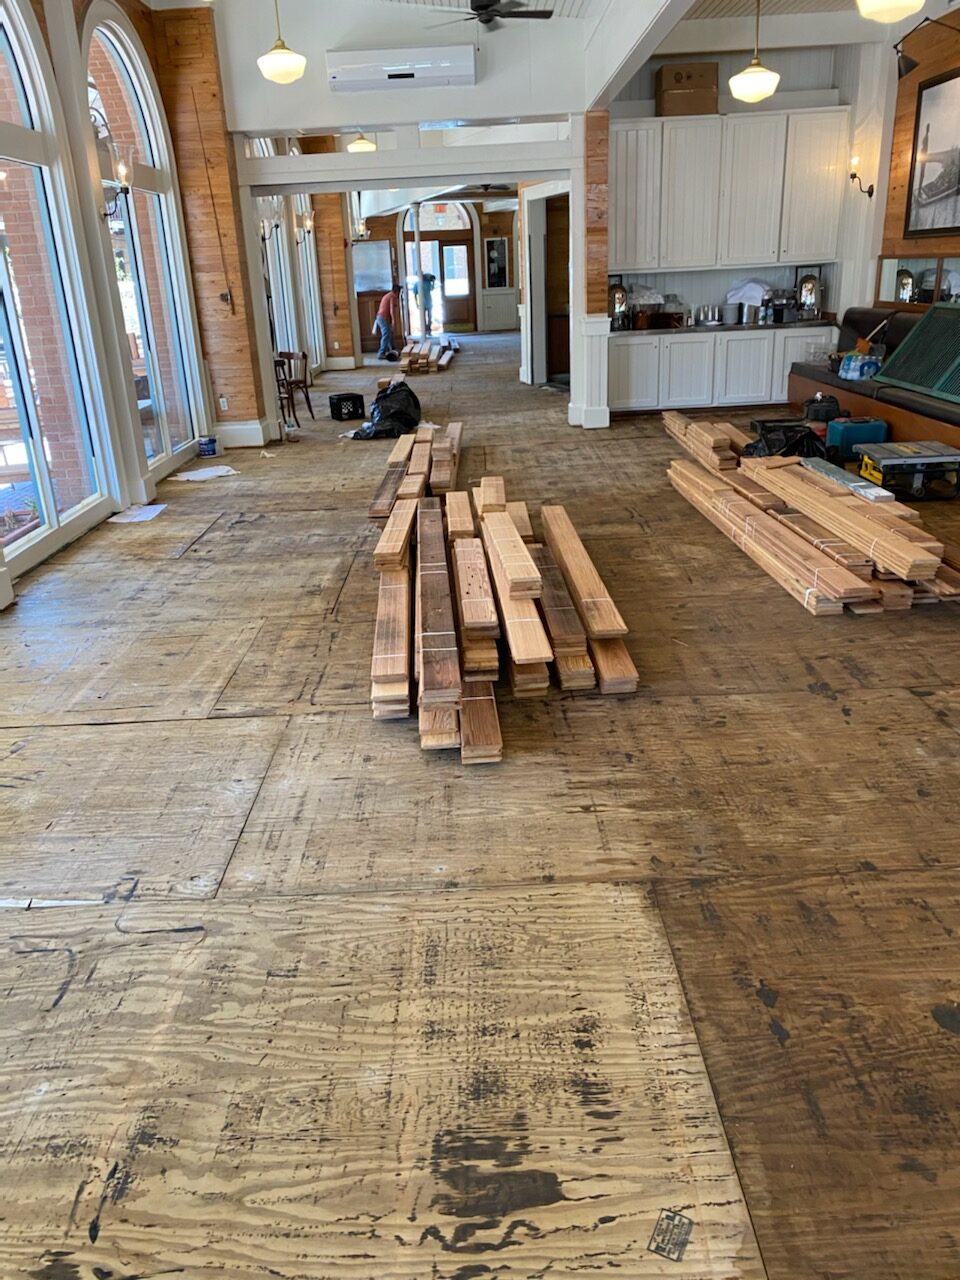 Photo of demoed wood flooring in a restaurant.